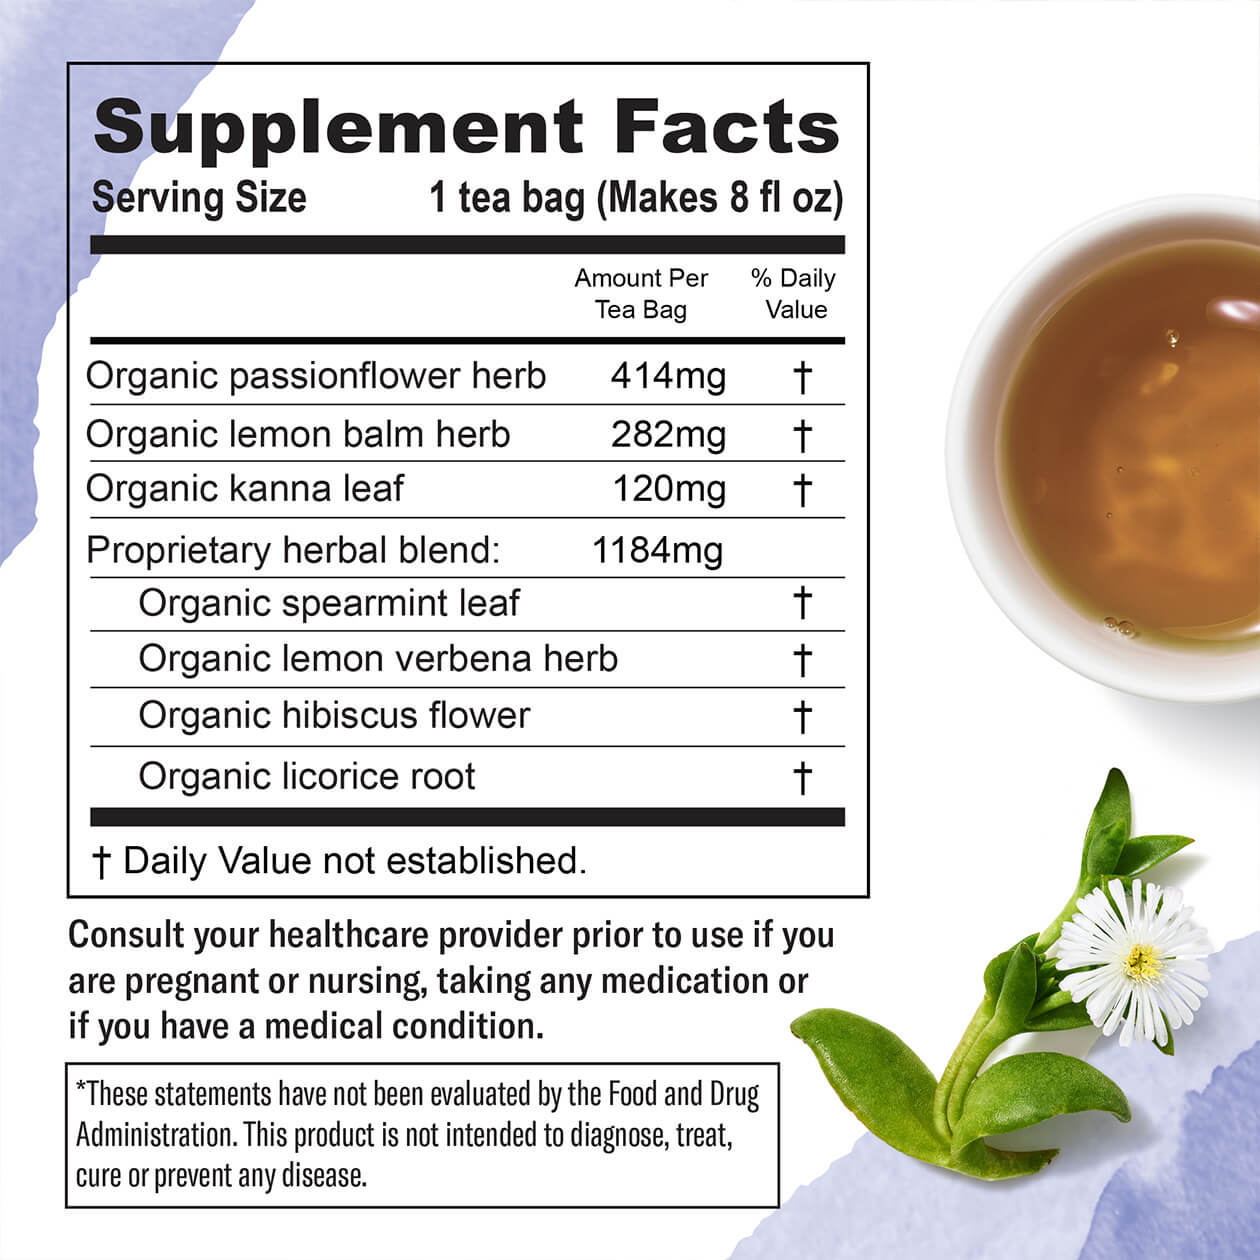 The supplement facts for Numi's De-Stress dietary supplement tea